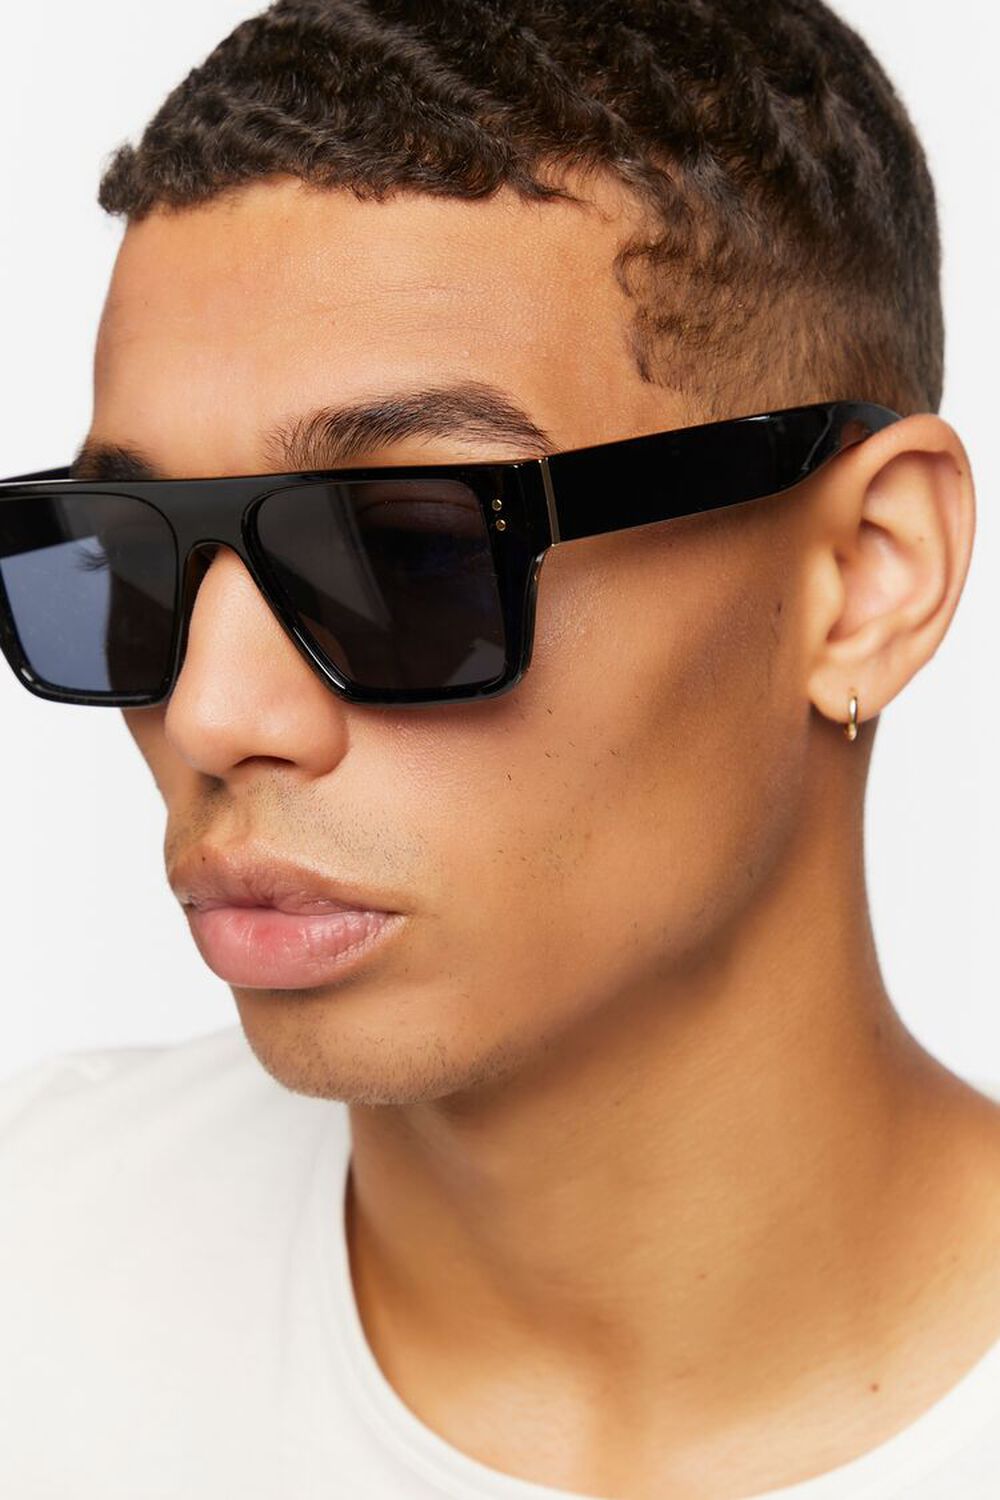 Men Square Frame Sunglasses